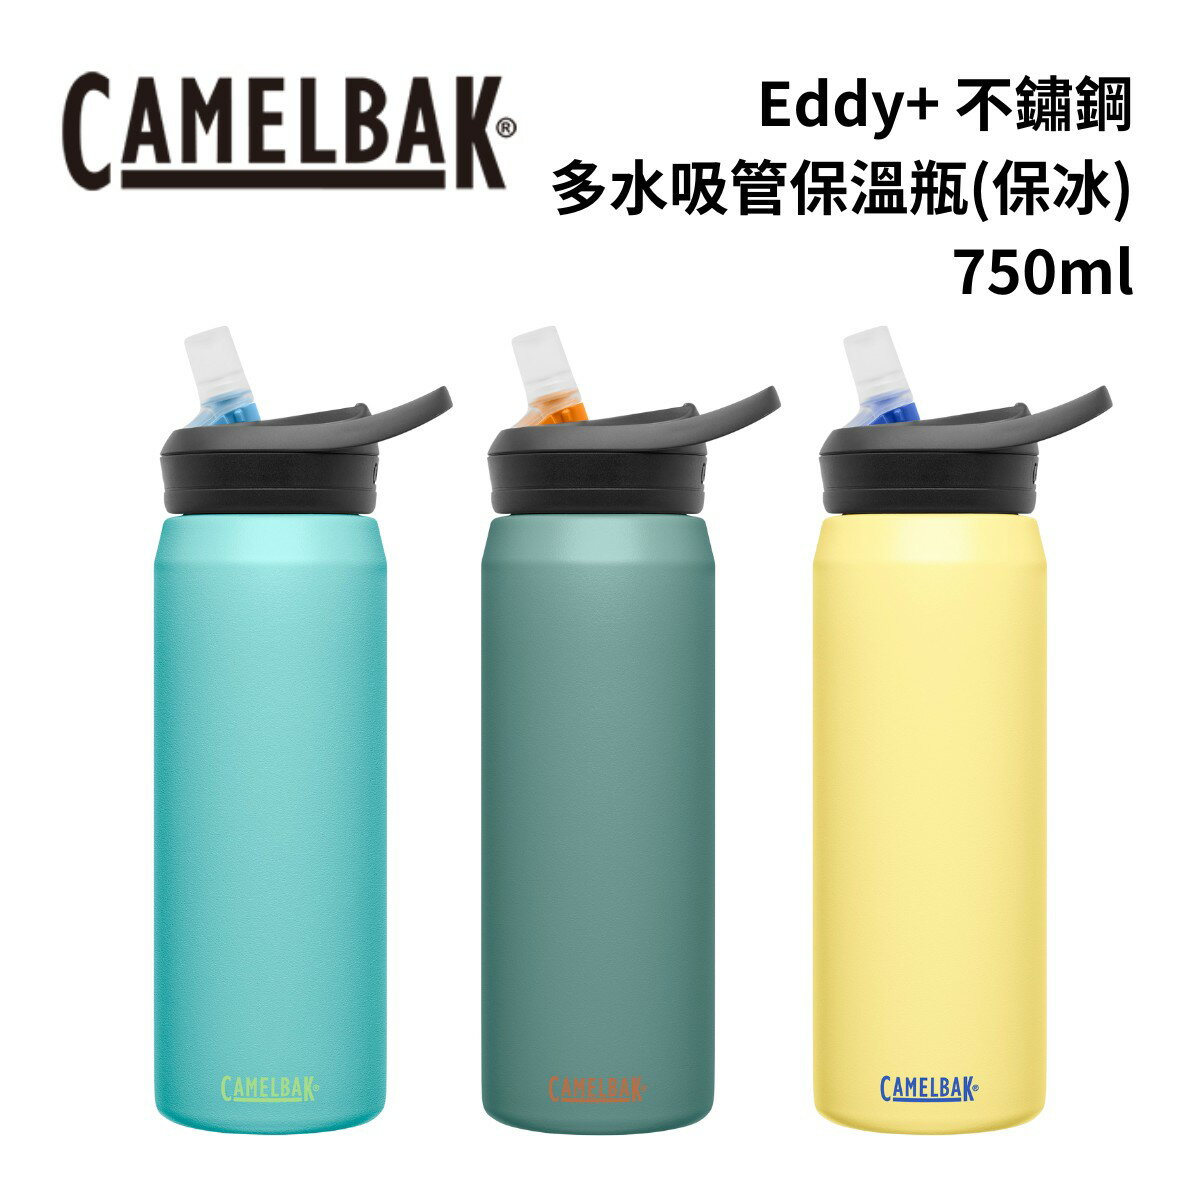 Camelbak eddy+ 不鏽鋼多水吸管保冰/保溫瓶 750ml